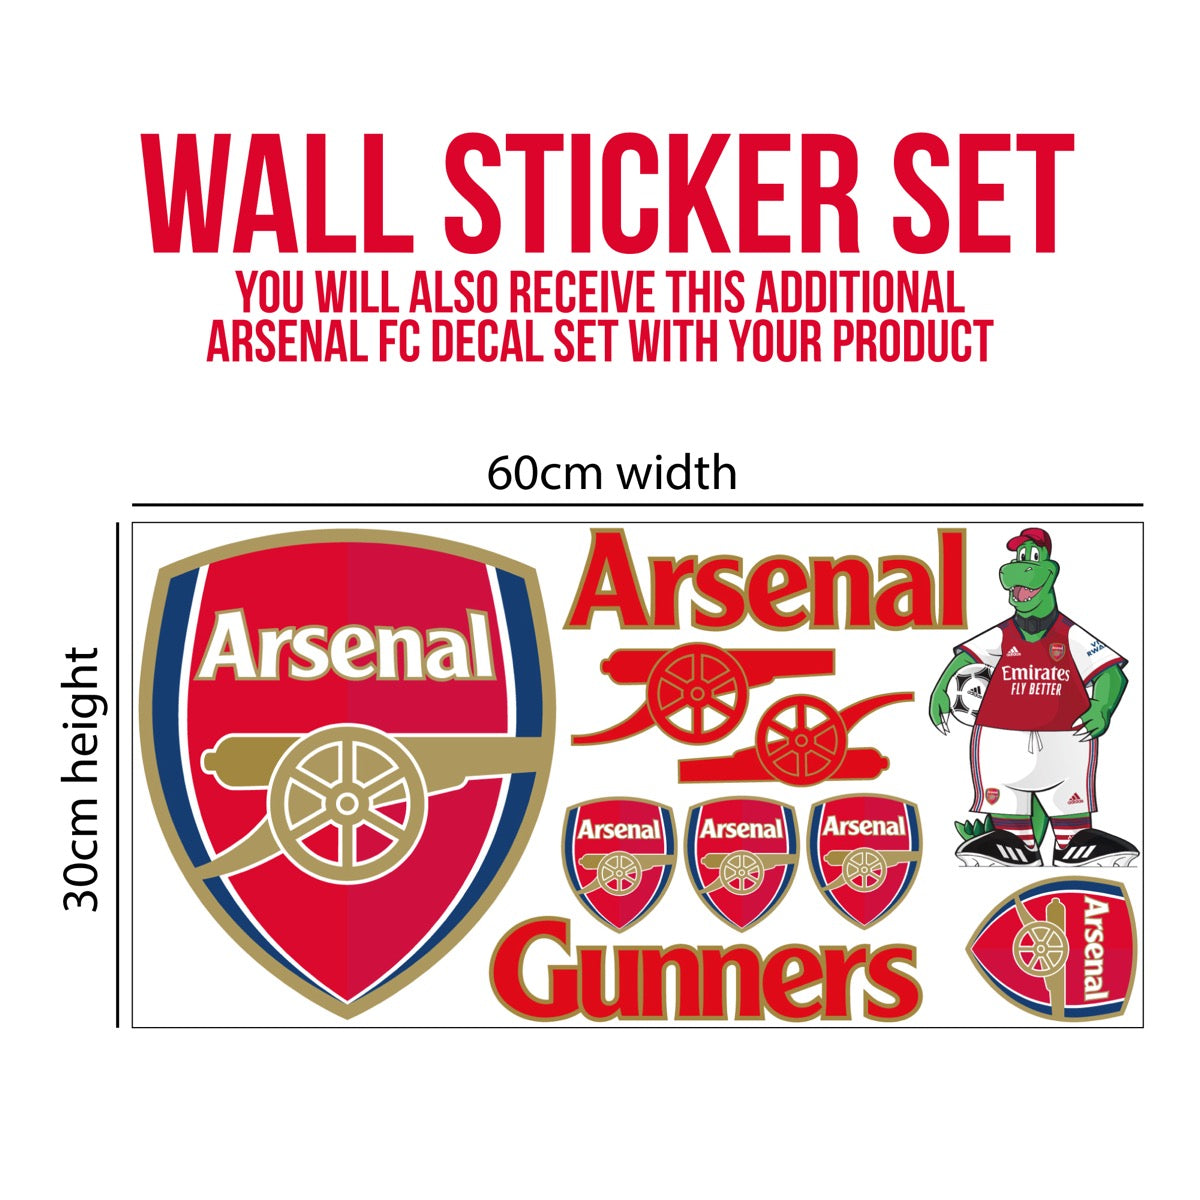 Arsenal Football Club - Emirates Stadium Rooftop View + Gunners Wall Sticker Set